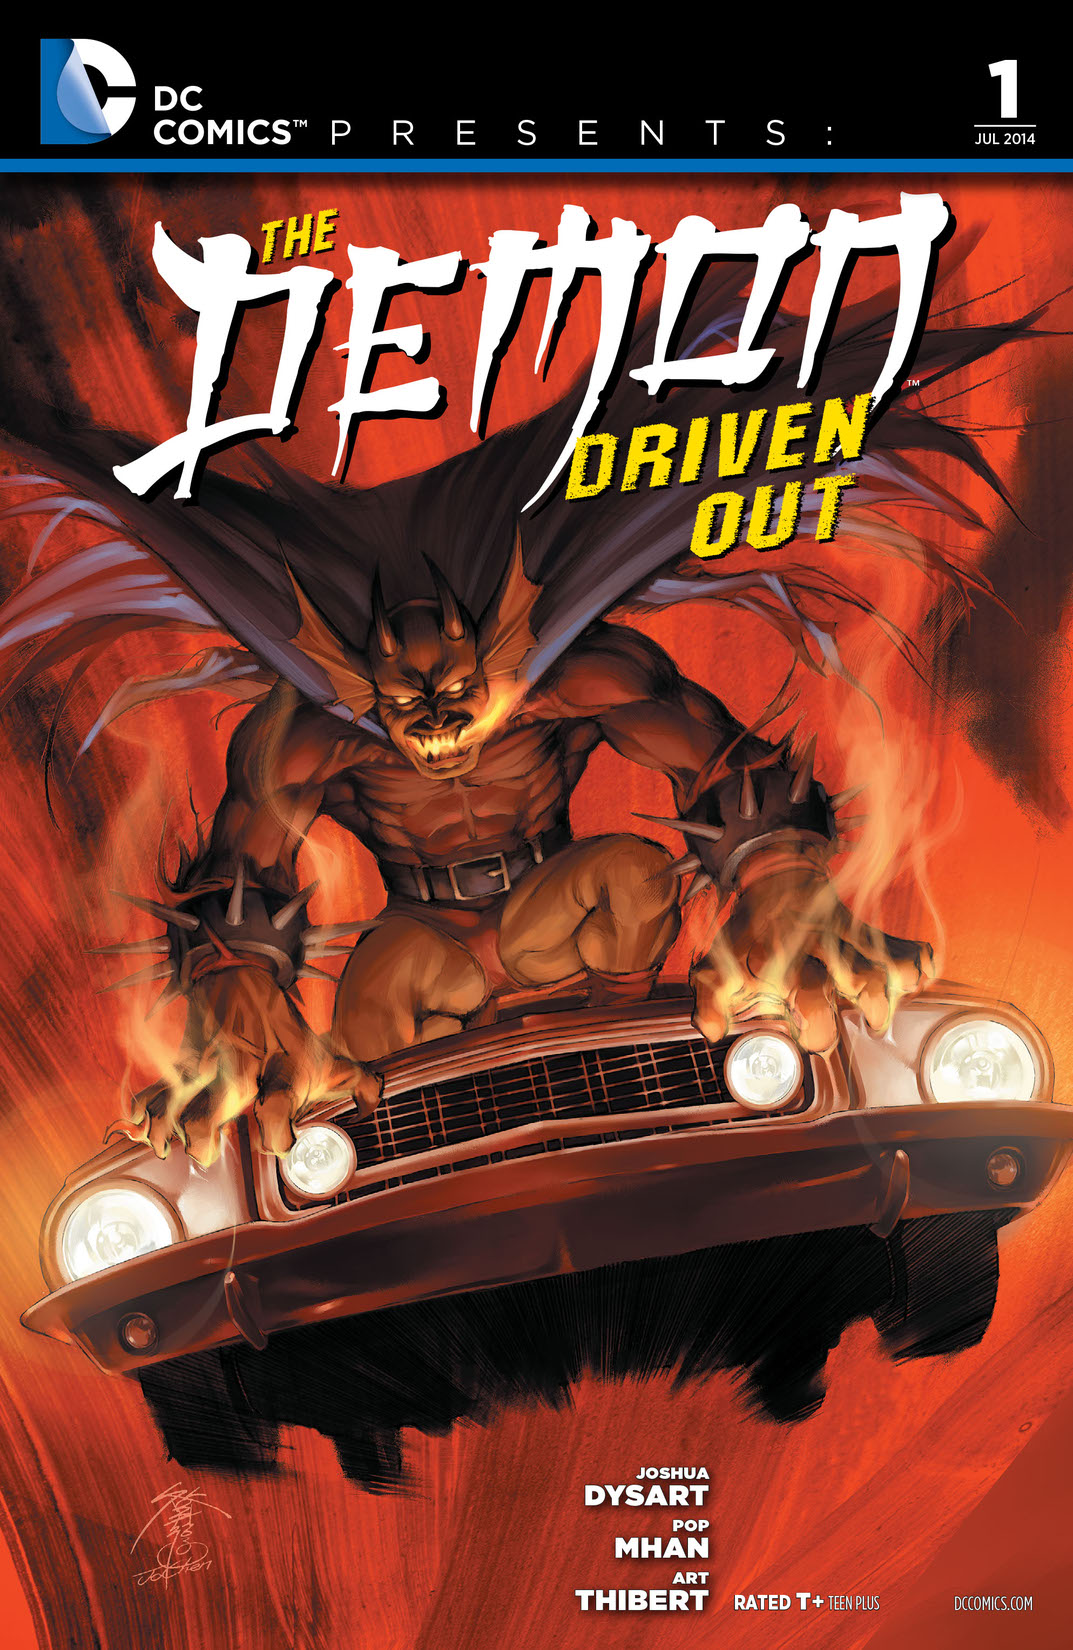 DC Comics Presents: The Demon Driven Out (2014-) #1 preview images